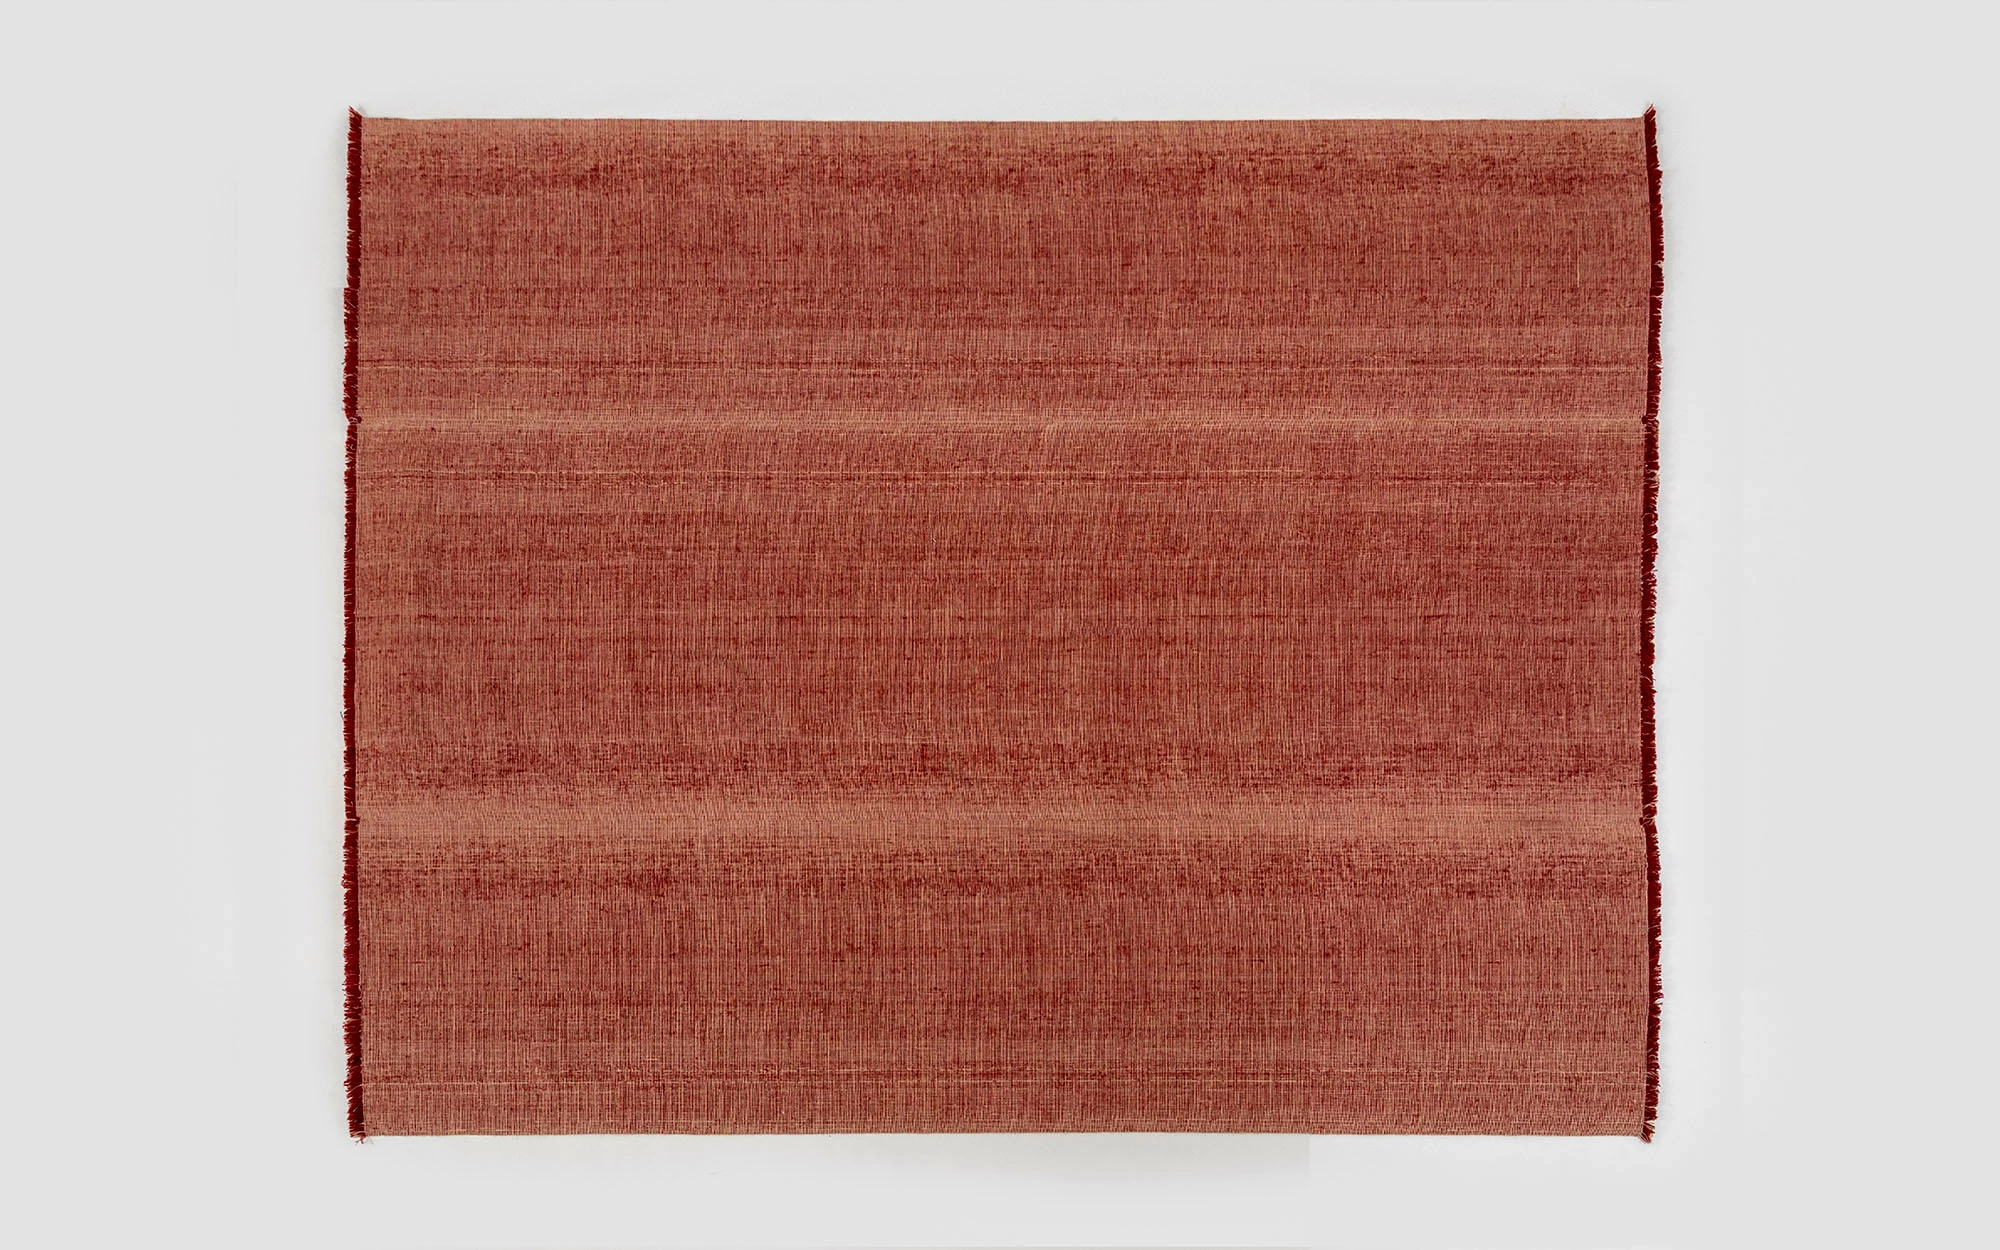 Wilton Carpet S - Ronan & Erwan Bouroullec - Seating - Galerie kreo